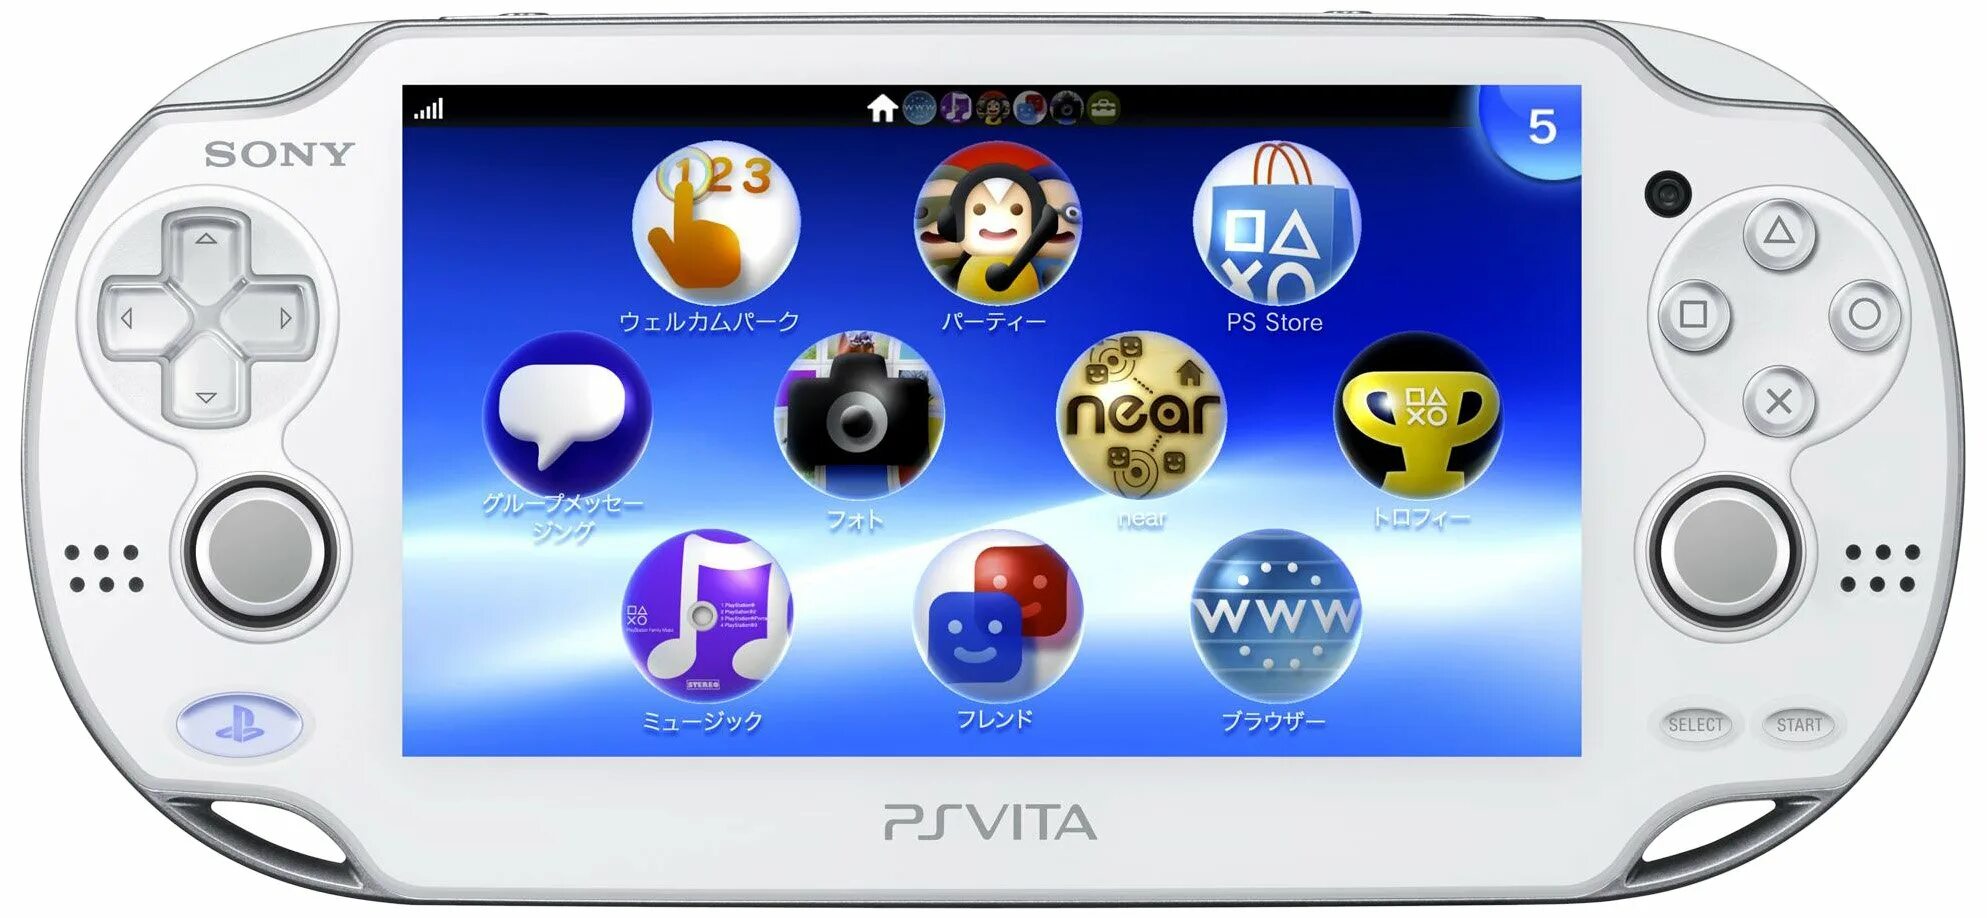 Sony PLAYSTATION Vita 2000. Игровая приставка Sony PLAYSTATION Vita 2000. Sony PLAYSTATION Vita Slim. Игровая приставка PSVITA Sony белая.